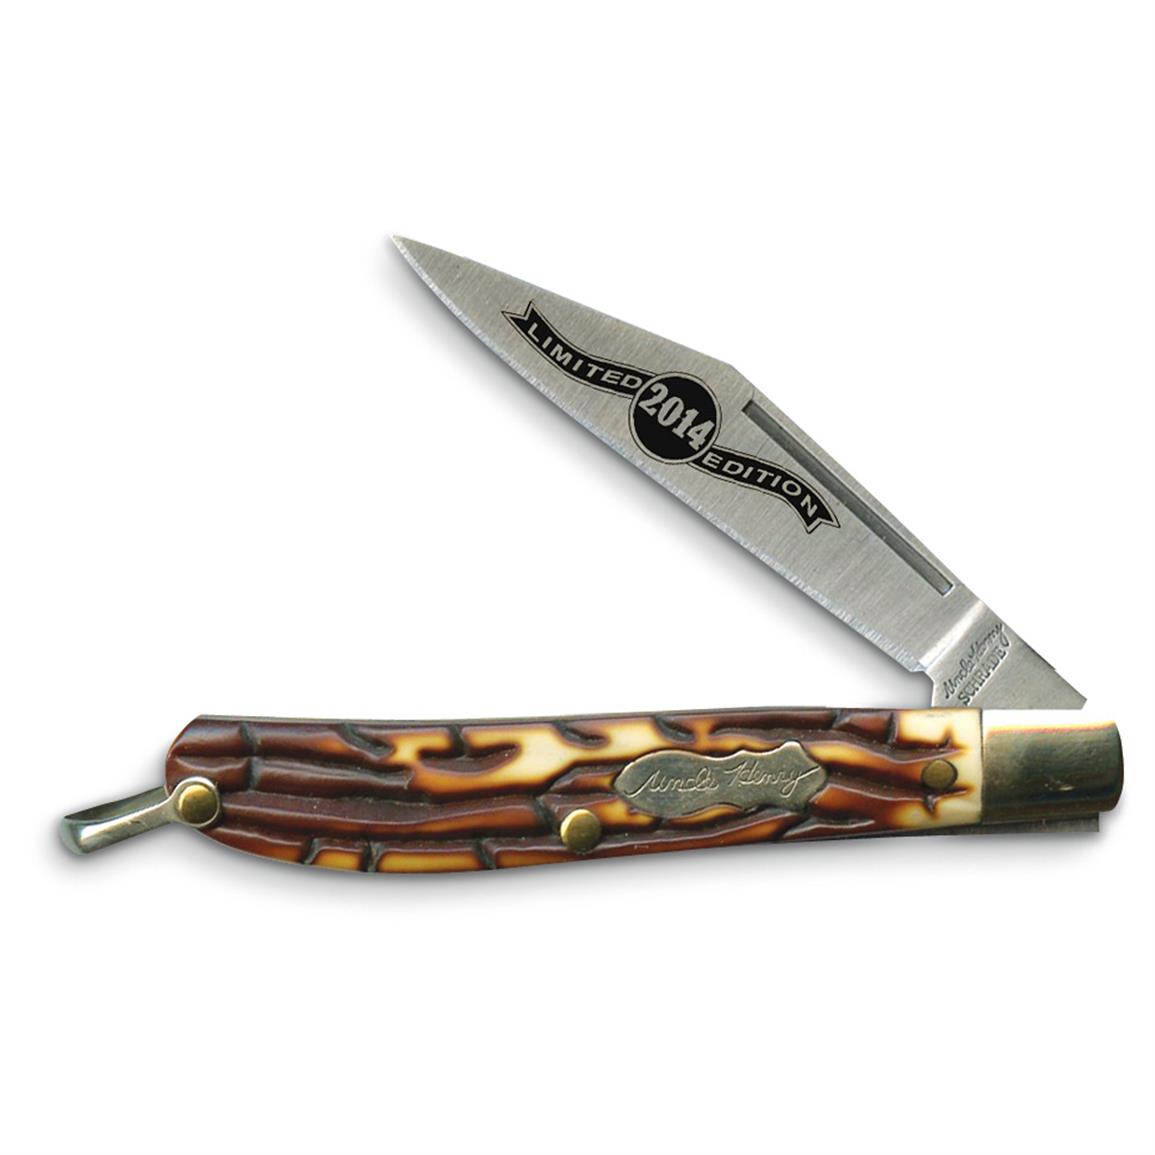 Uncle Henry Folding Pocket Knife Limited Edition Gift Set, 3 Knives